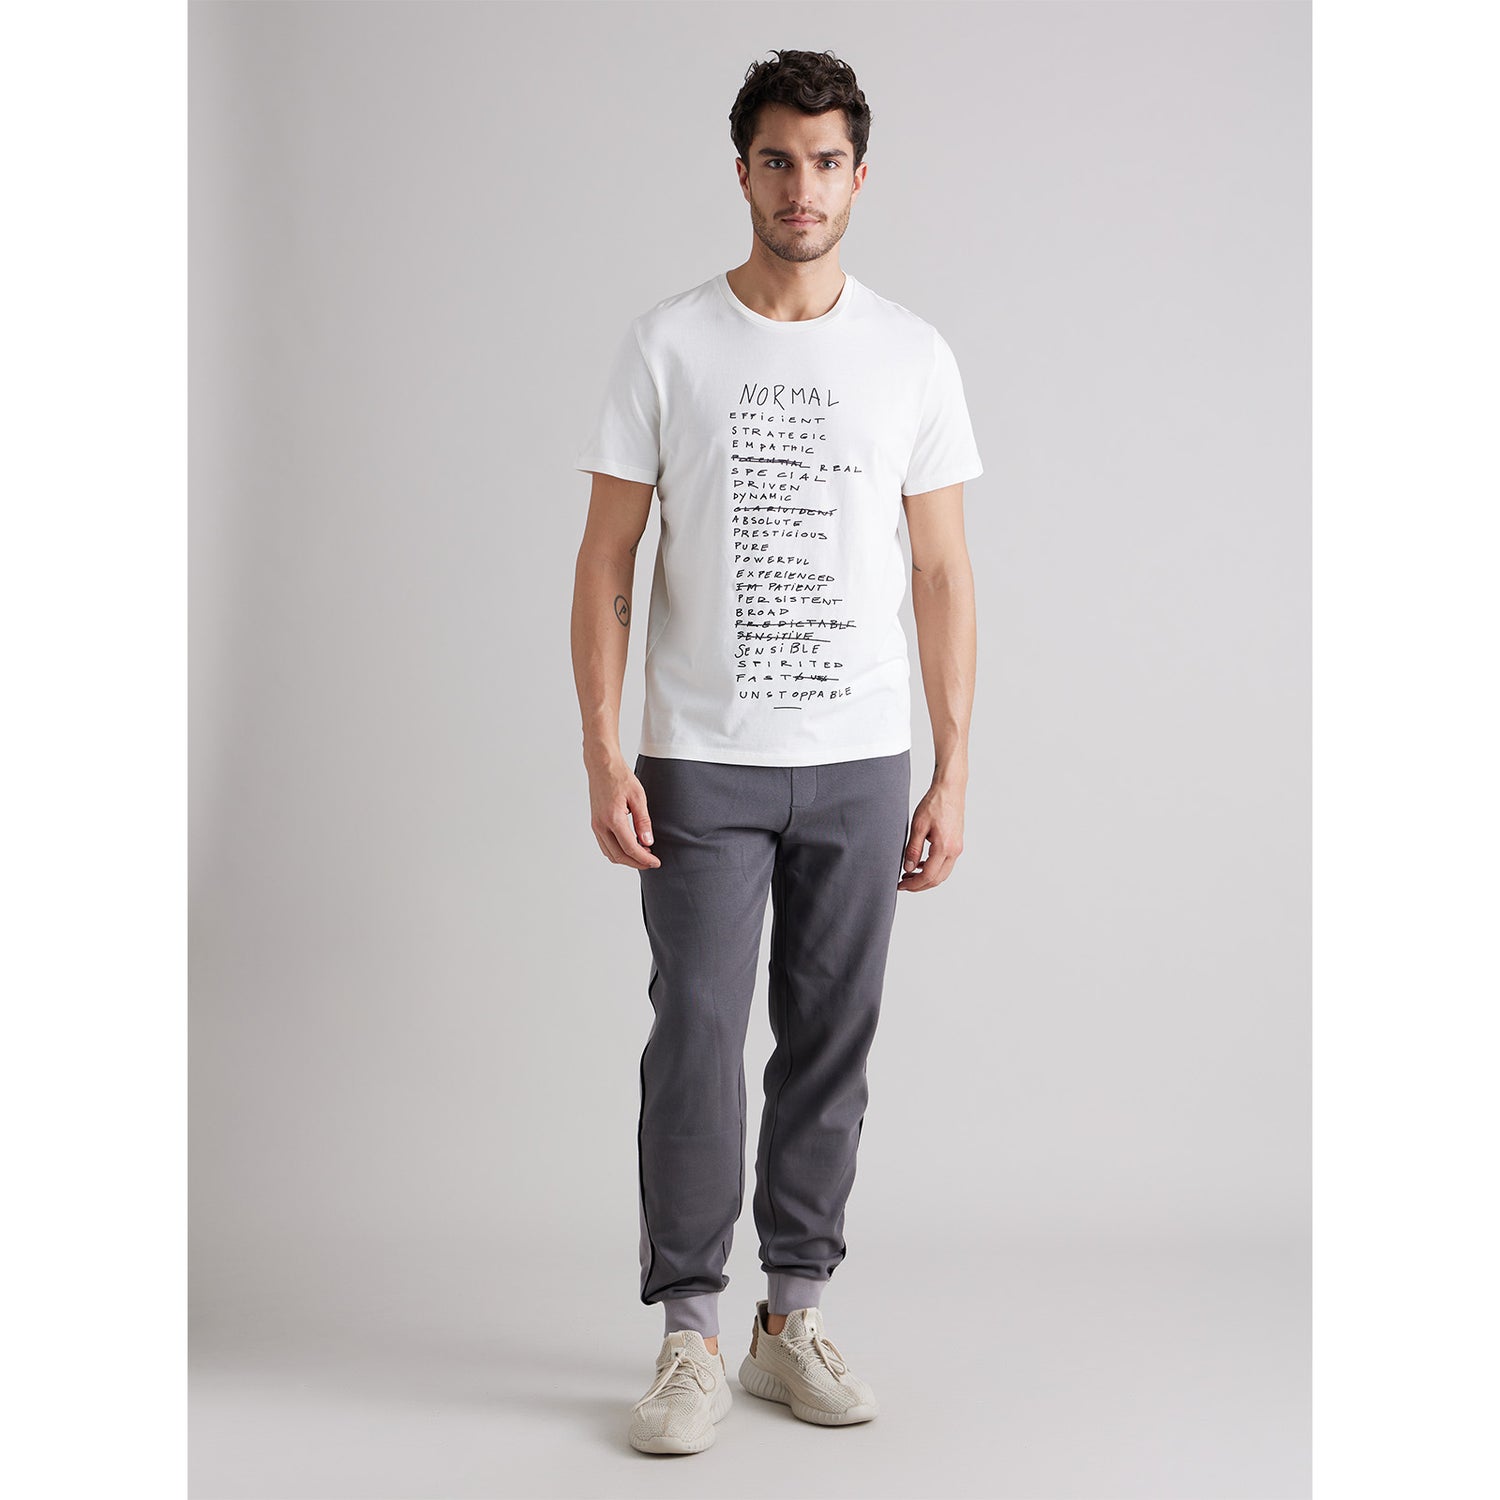 Men Graphic Print White Short Sleeve T-shirt (Various Sizes)